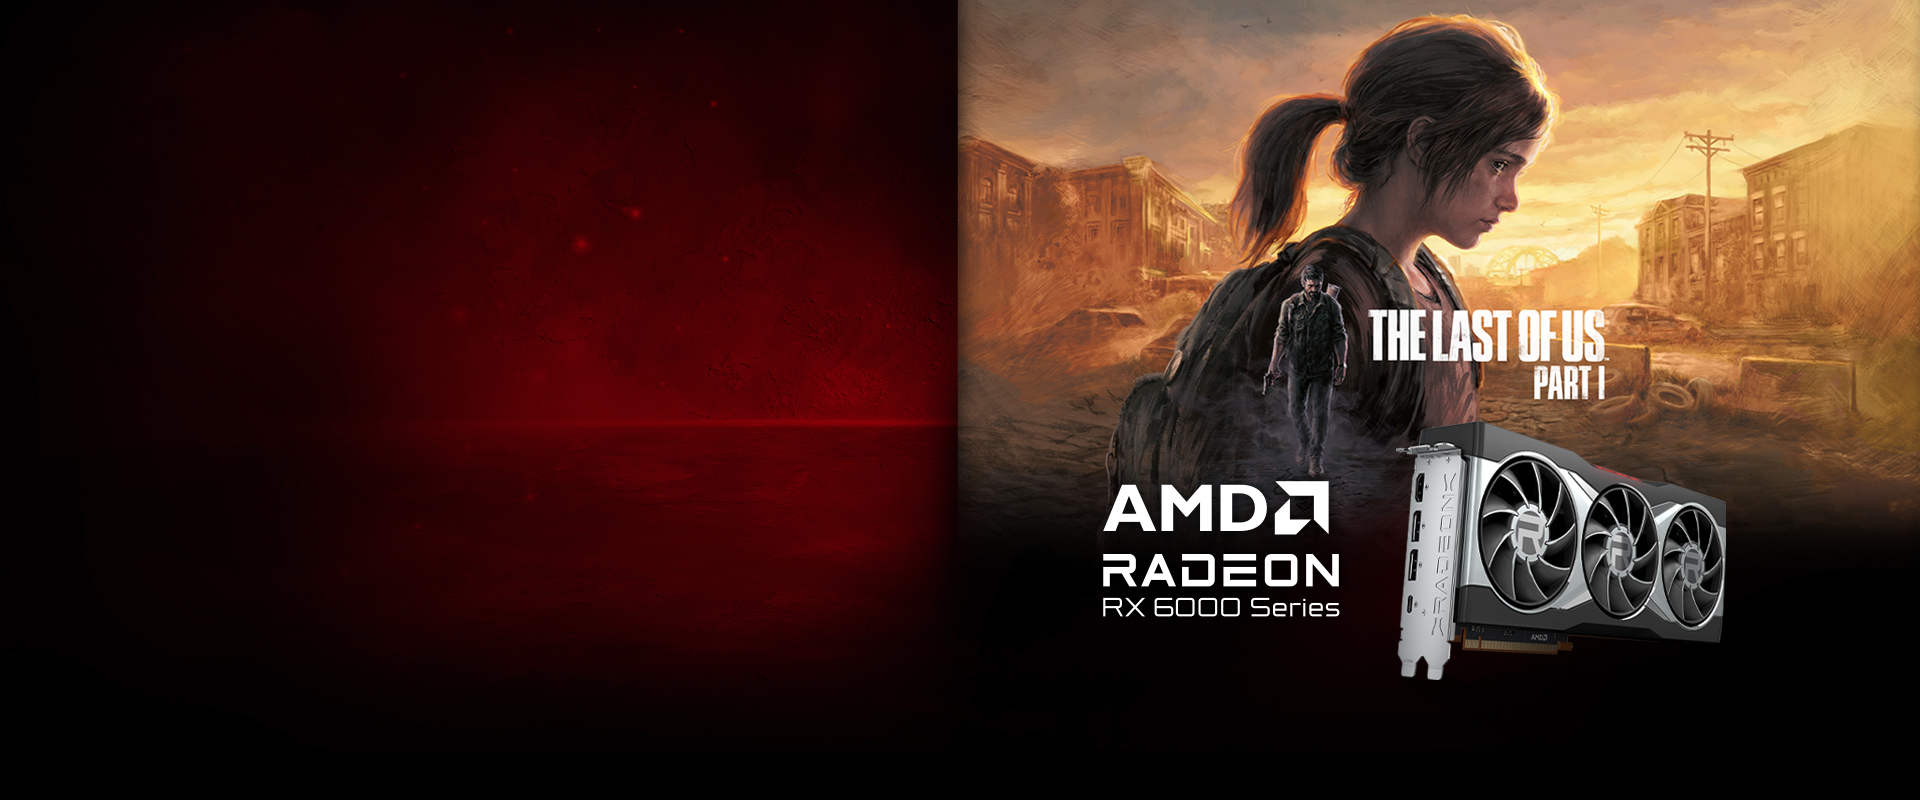 AMD Radeon The Last of Us Bundle